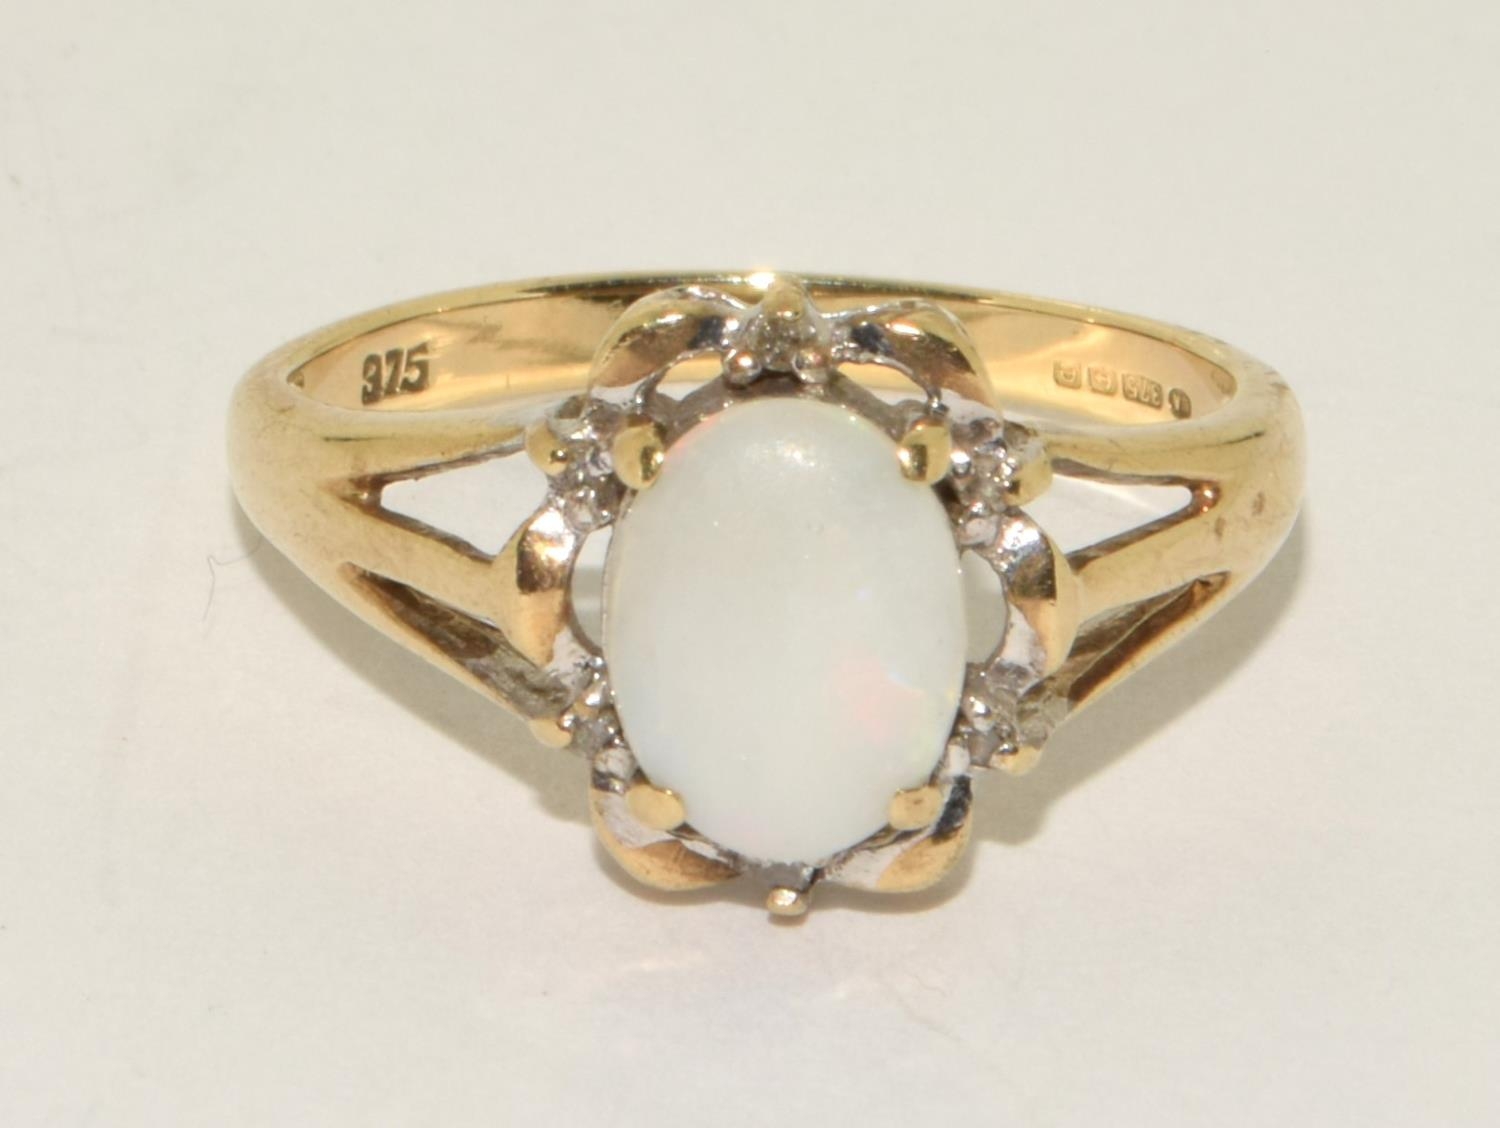 Vintage 9ct gold natural Opal ring size L - Image 5 of 5